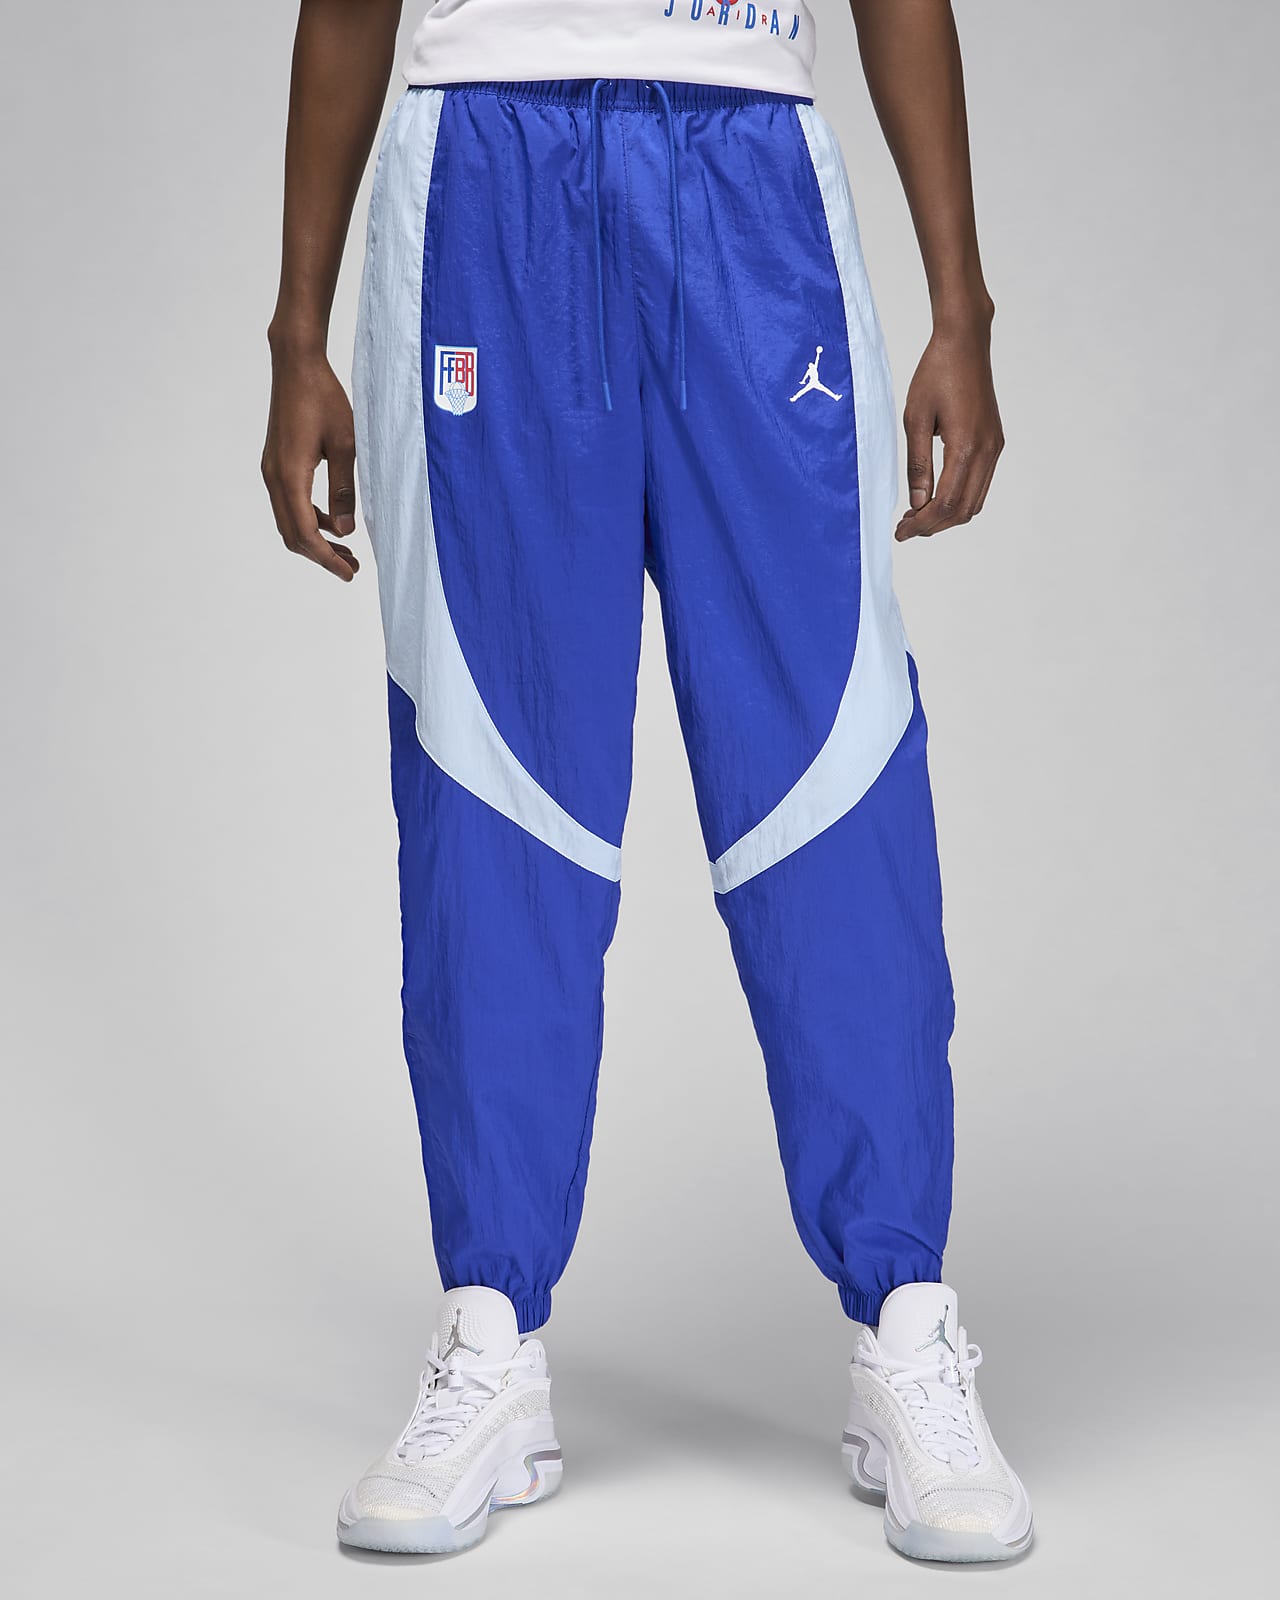 Jordan Sport JAM x Fédération Française de Basketball Men's Warm-Up Trousers